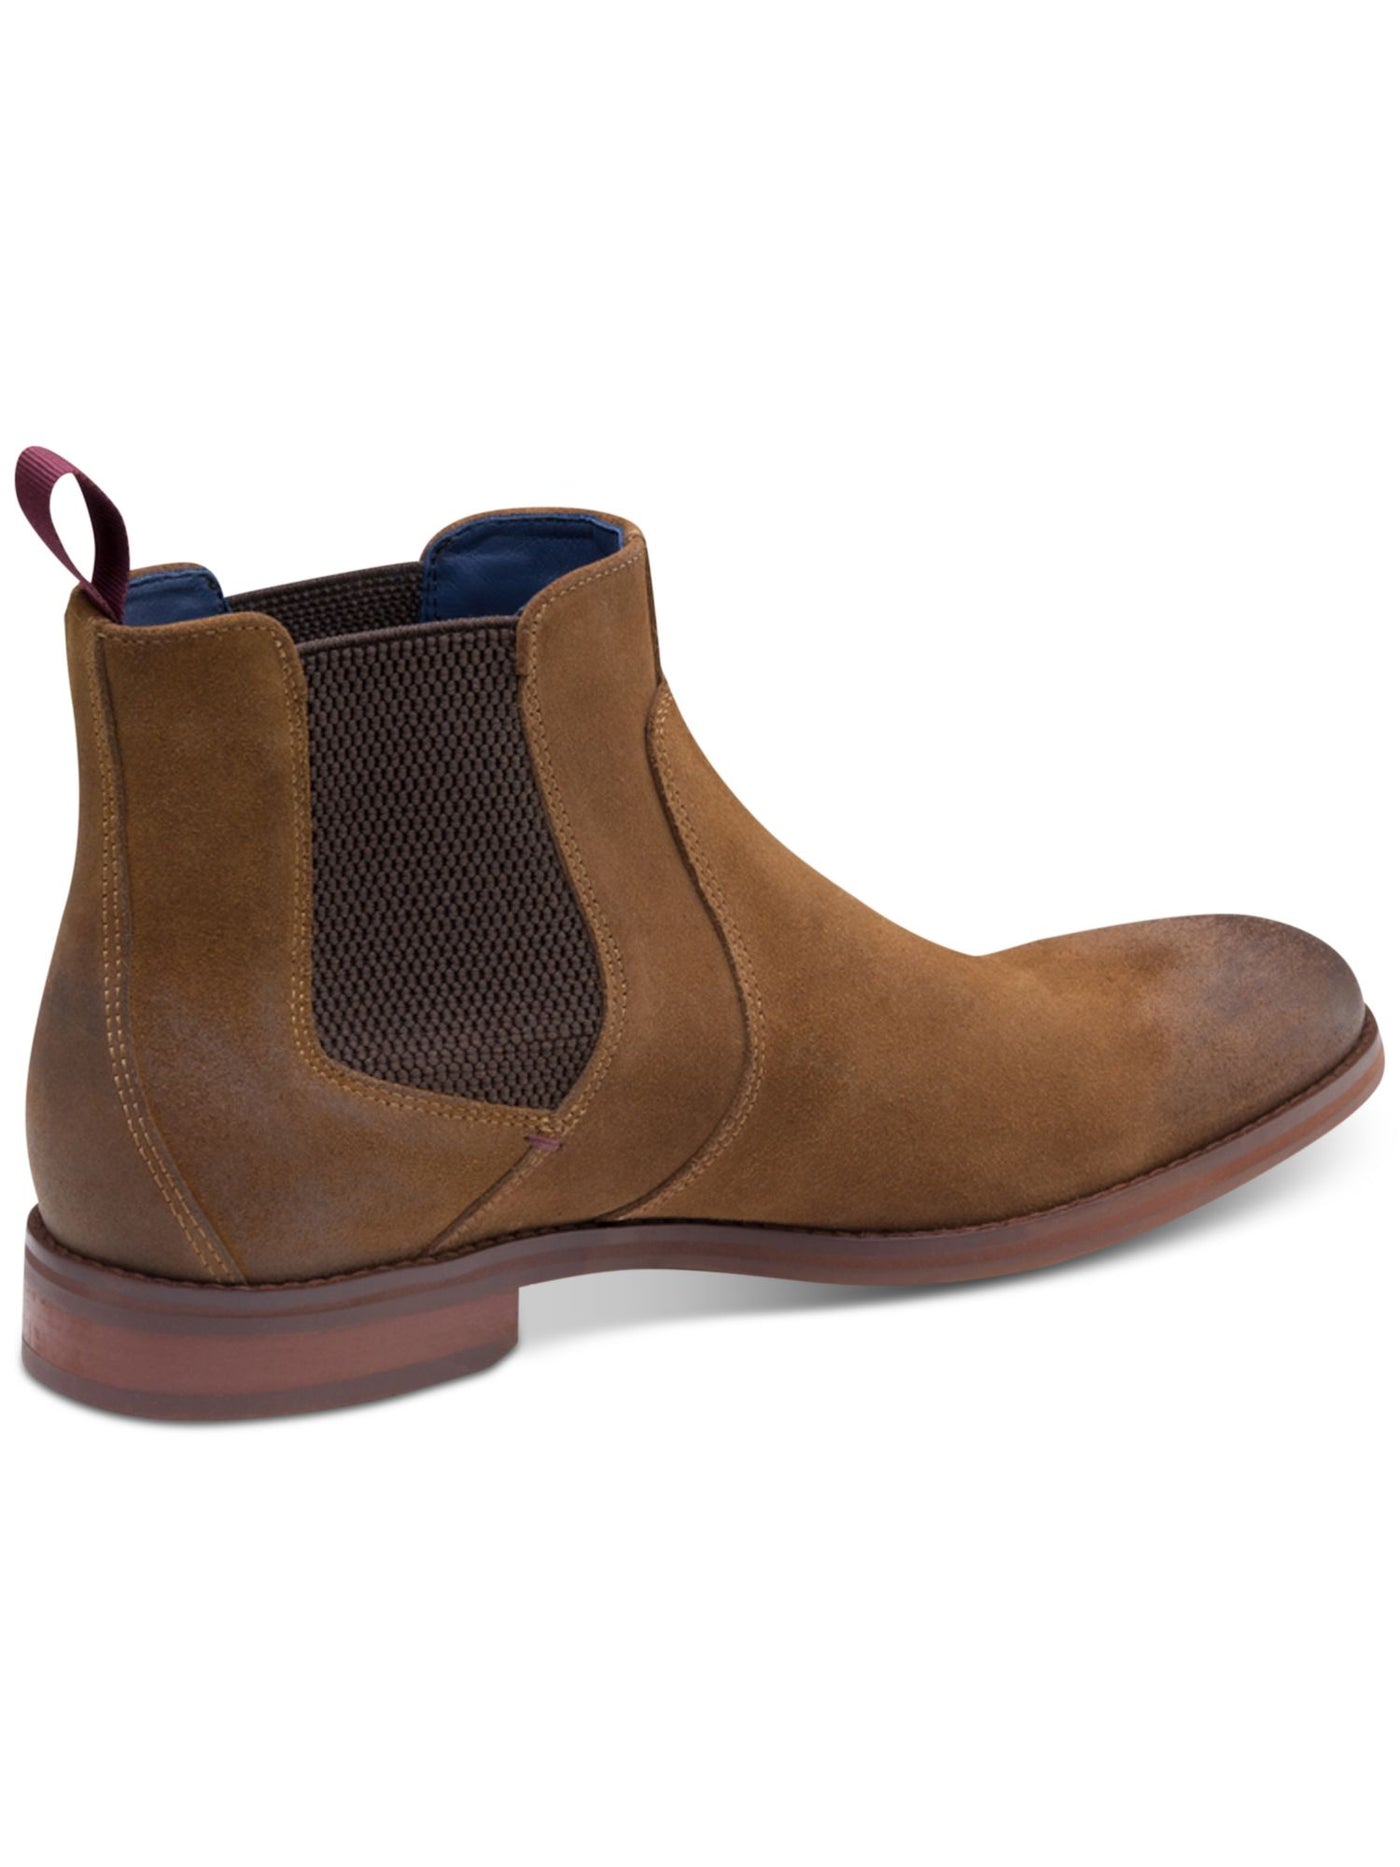 JOHNSTON & MURPHY Mens Brown Goring Comfort Danby Round Toe Block Heel Leather Boots 8 M